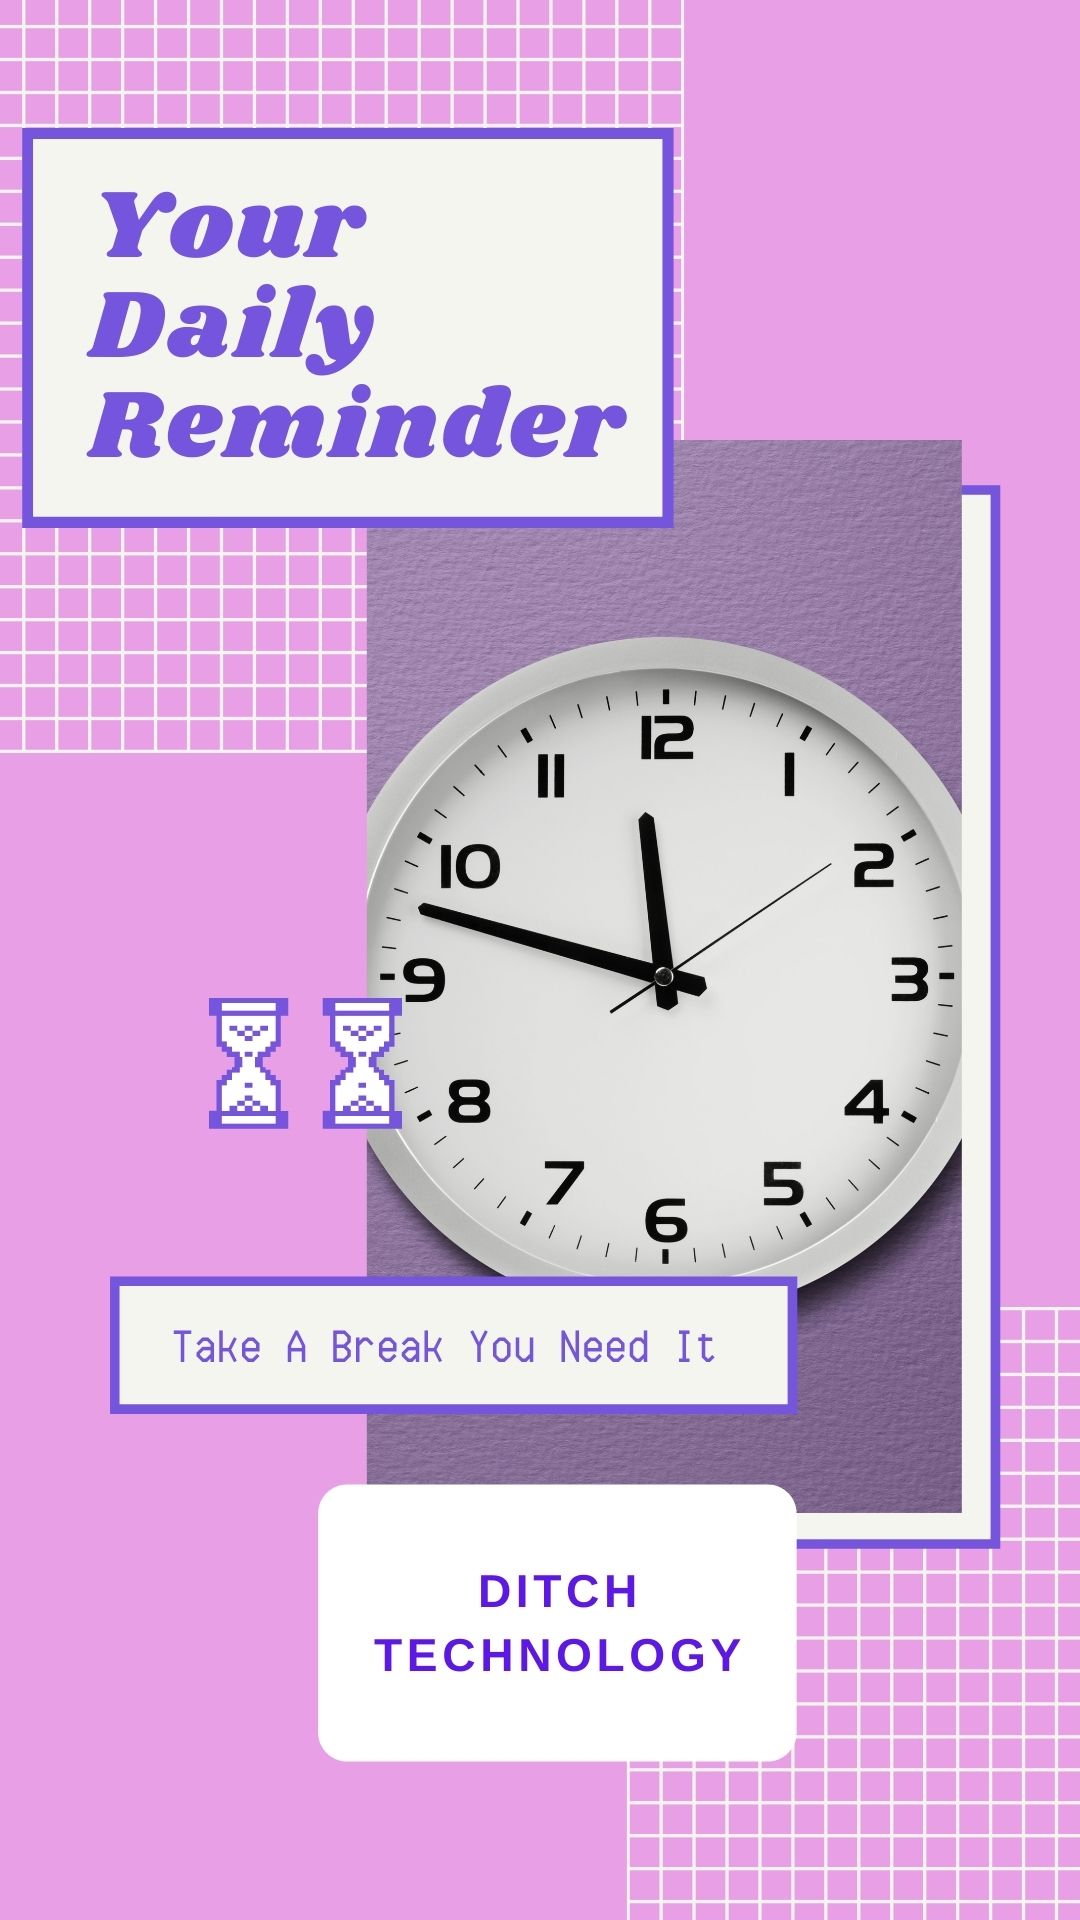 <img src="take.jpg" alt="Take a break reminder clock"/> 